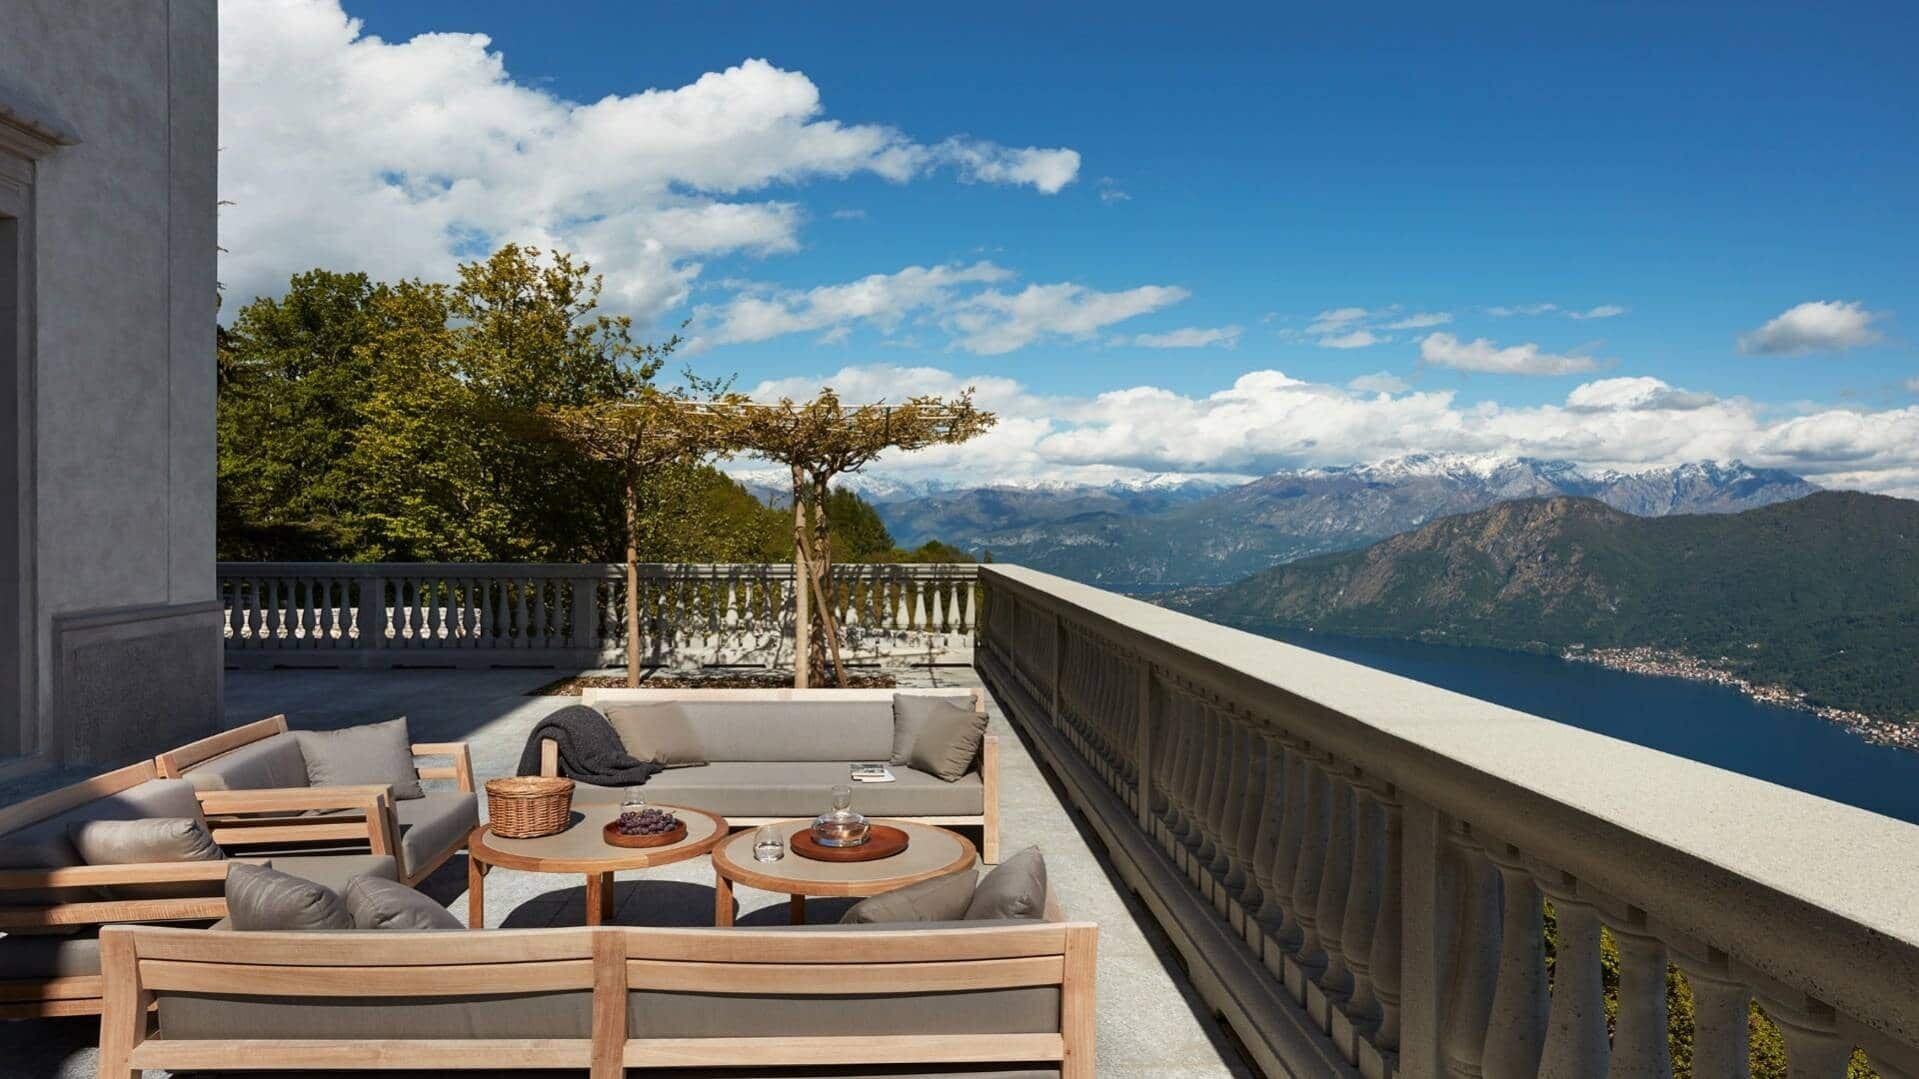 Francis York Villa Peduzzi is the Ultimate Luxury Vacation Home on Lake Como13.jpg